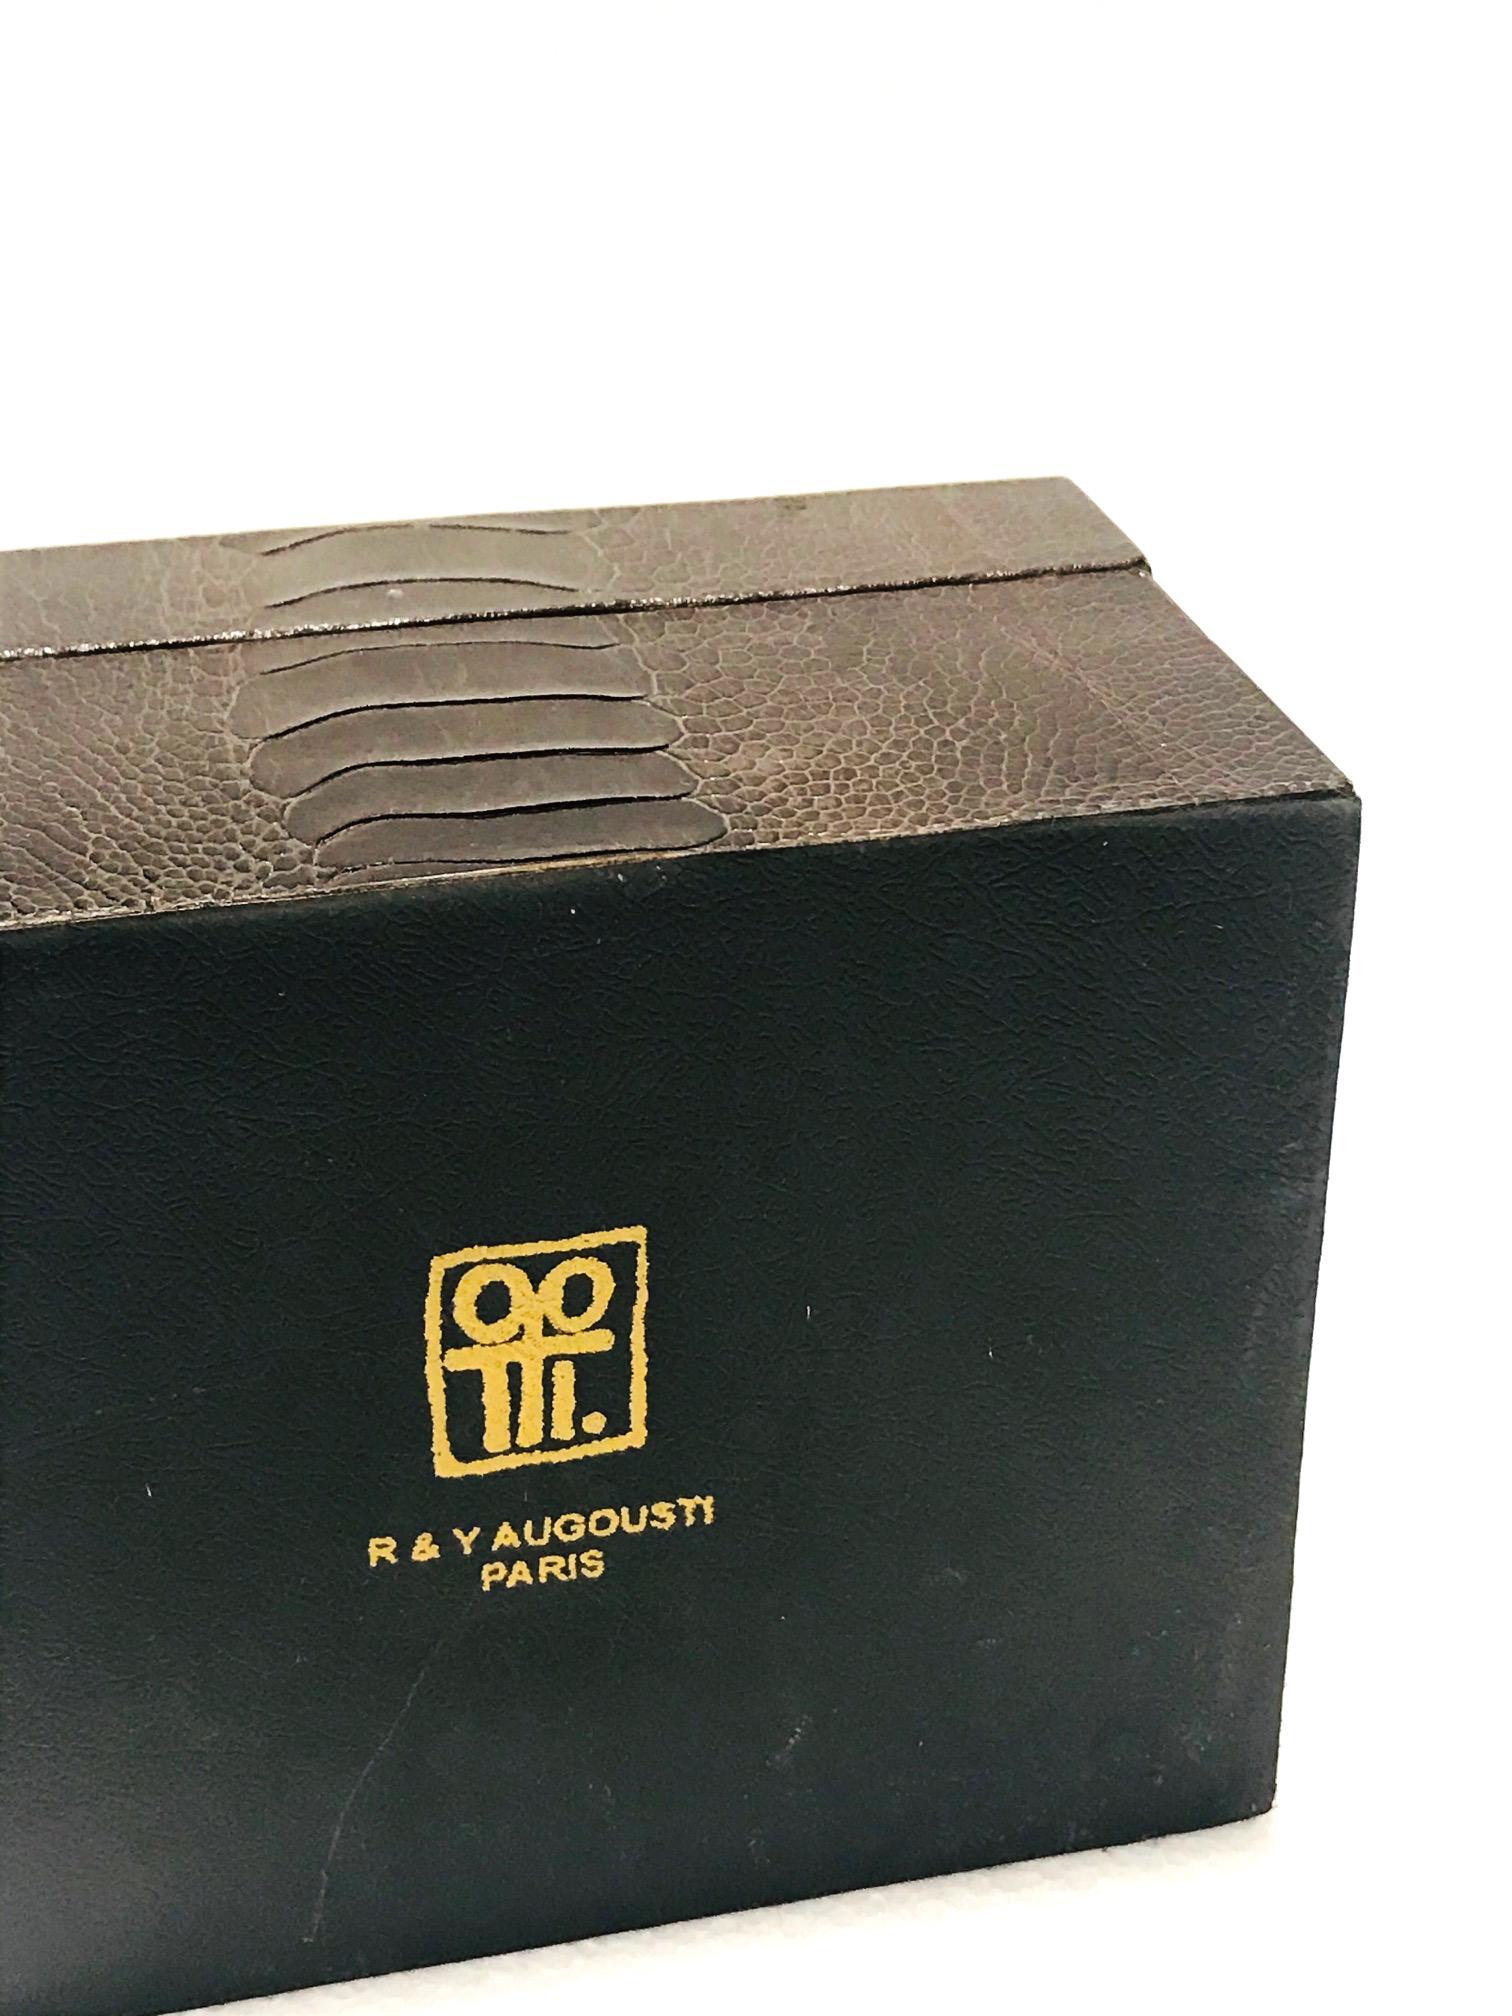 Vintage R&Y Augousti Decorative Box in Brown Ostrich Leather and Bone, c. 2000 2